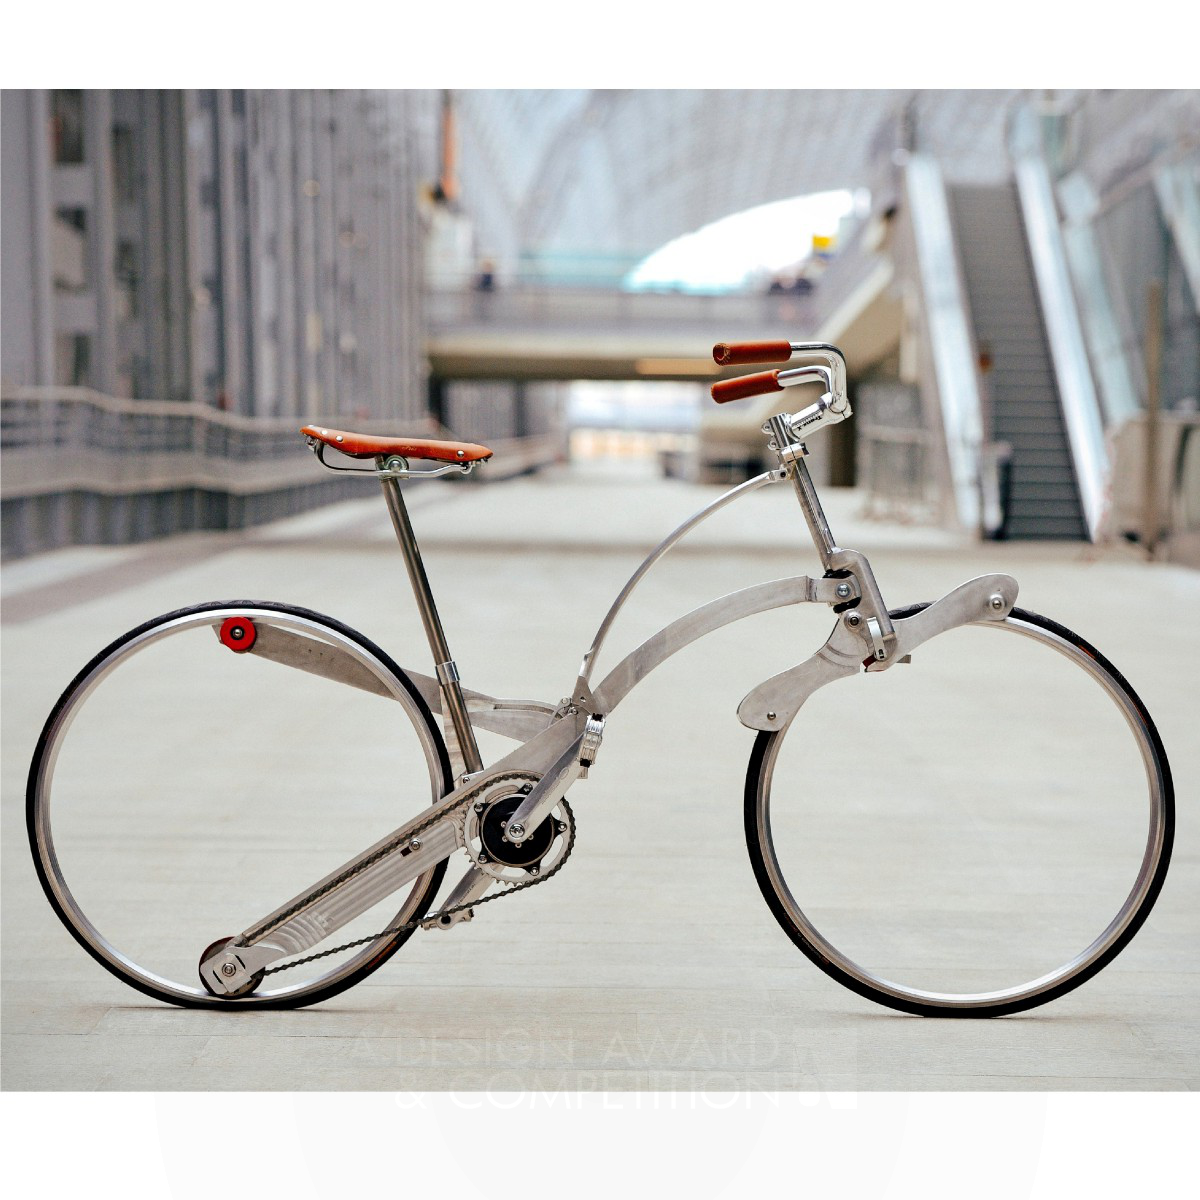 Sada Hubless Foldable Bike by Gianluca Sada